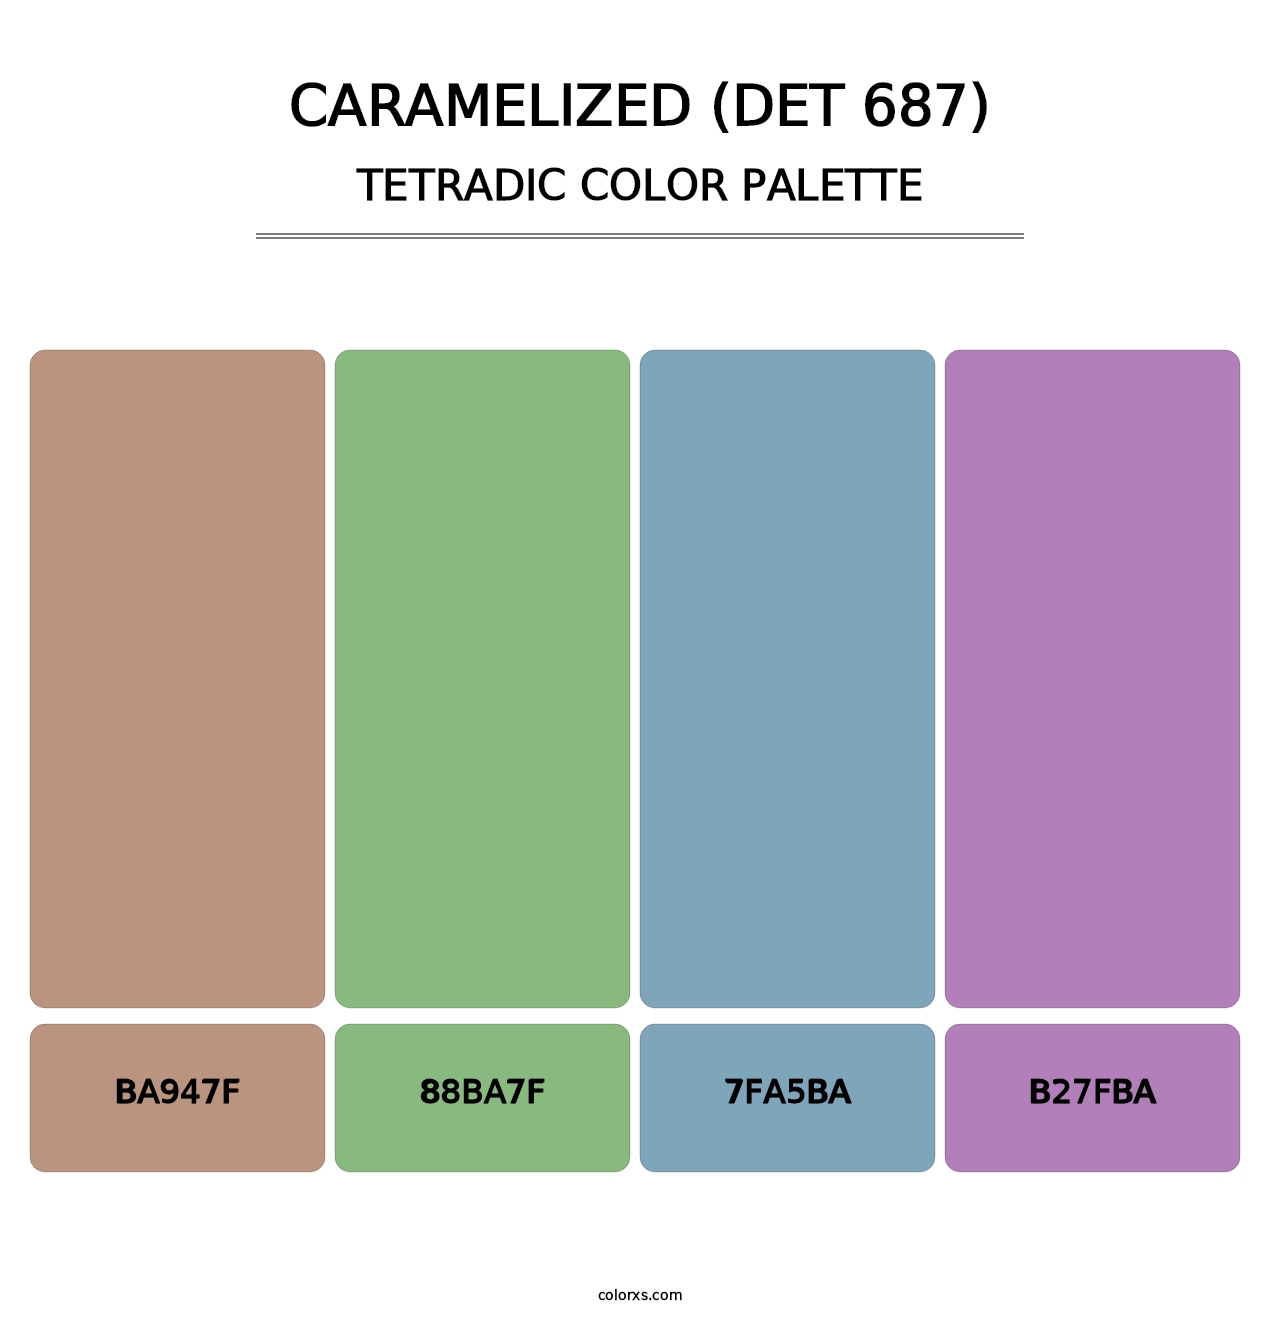 Caramelized (DET 687) - Tetradic Color Palette